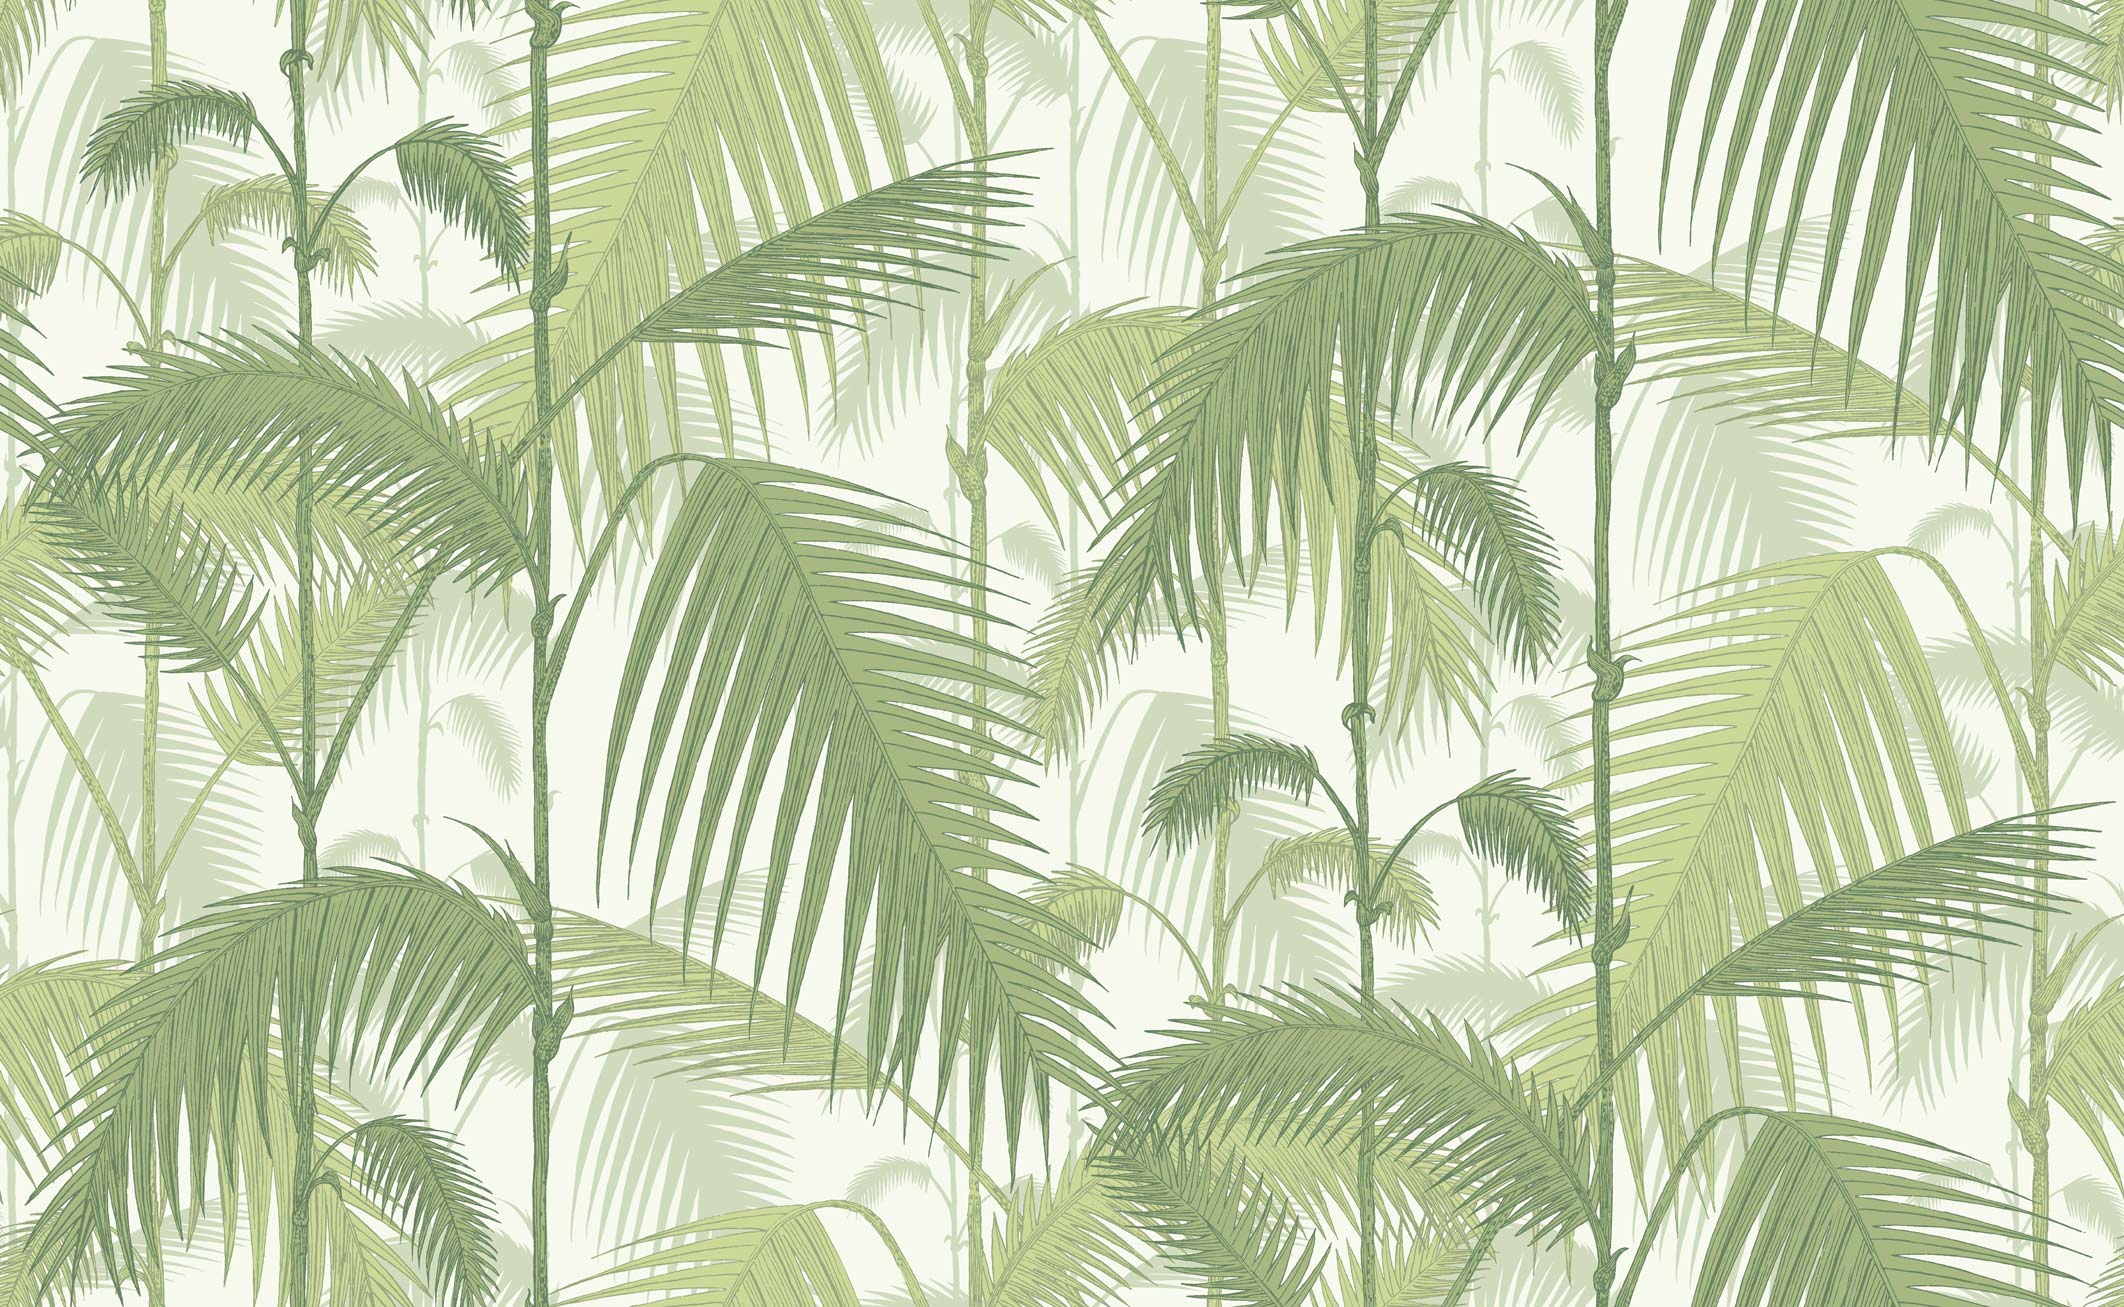 A green and white palm tree pattern - Jungle